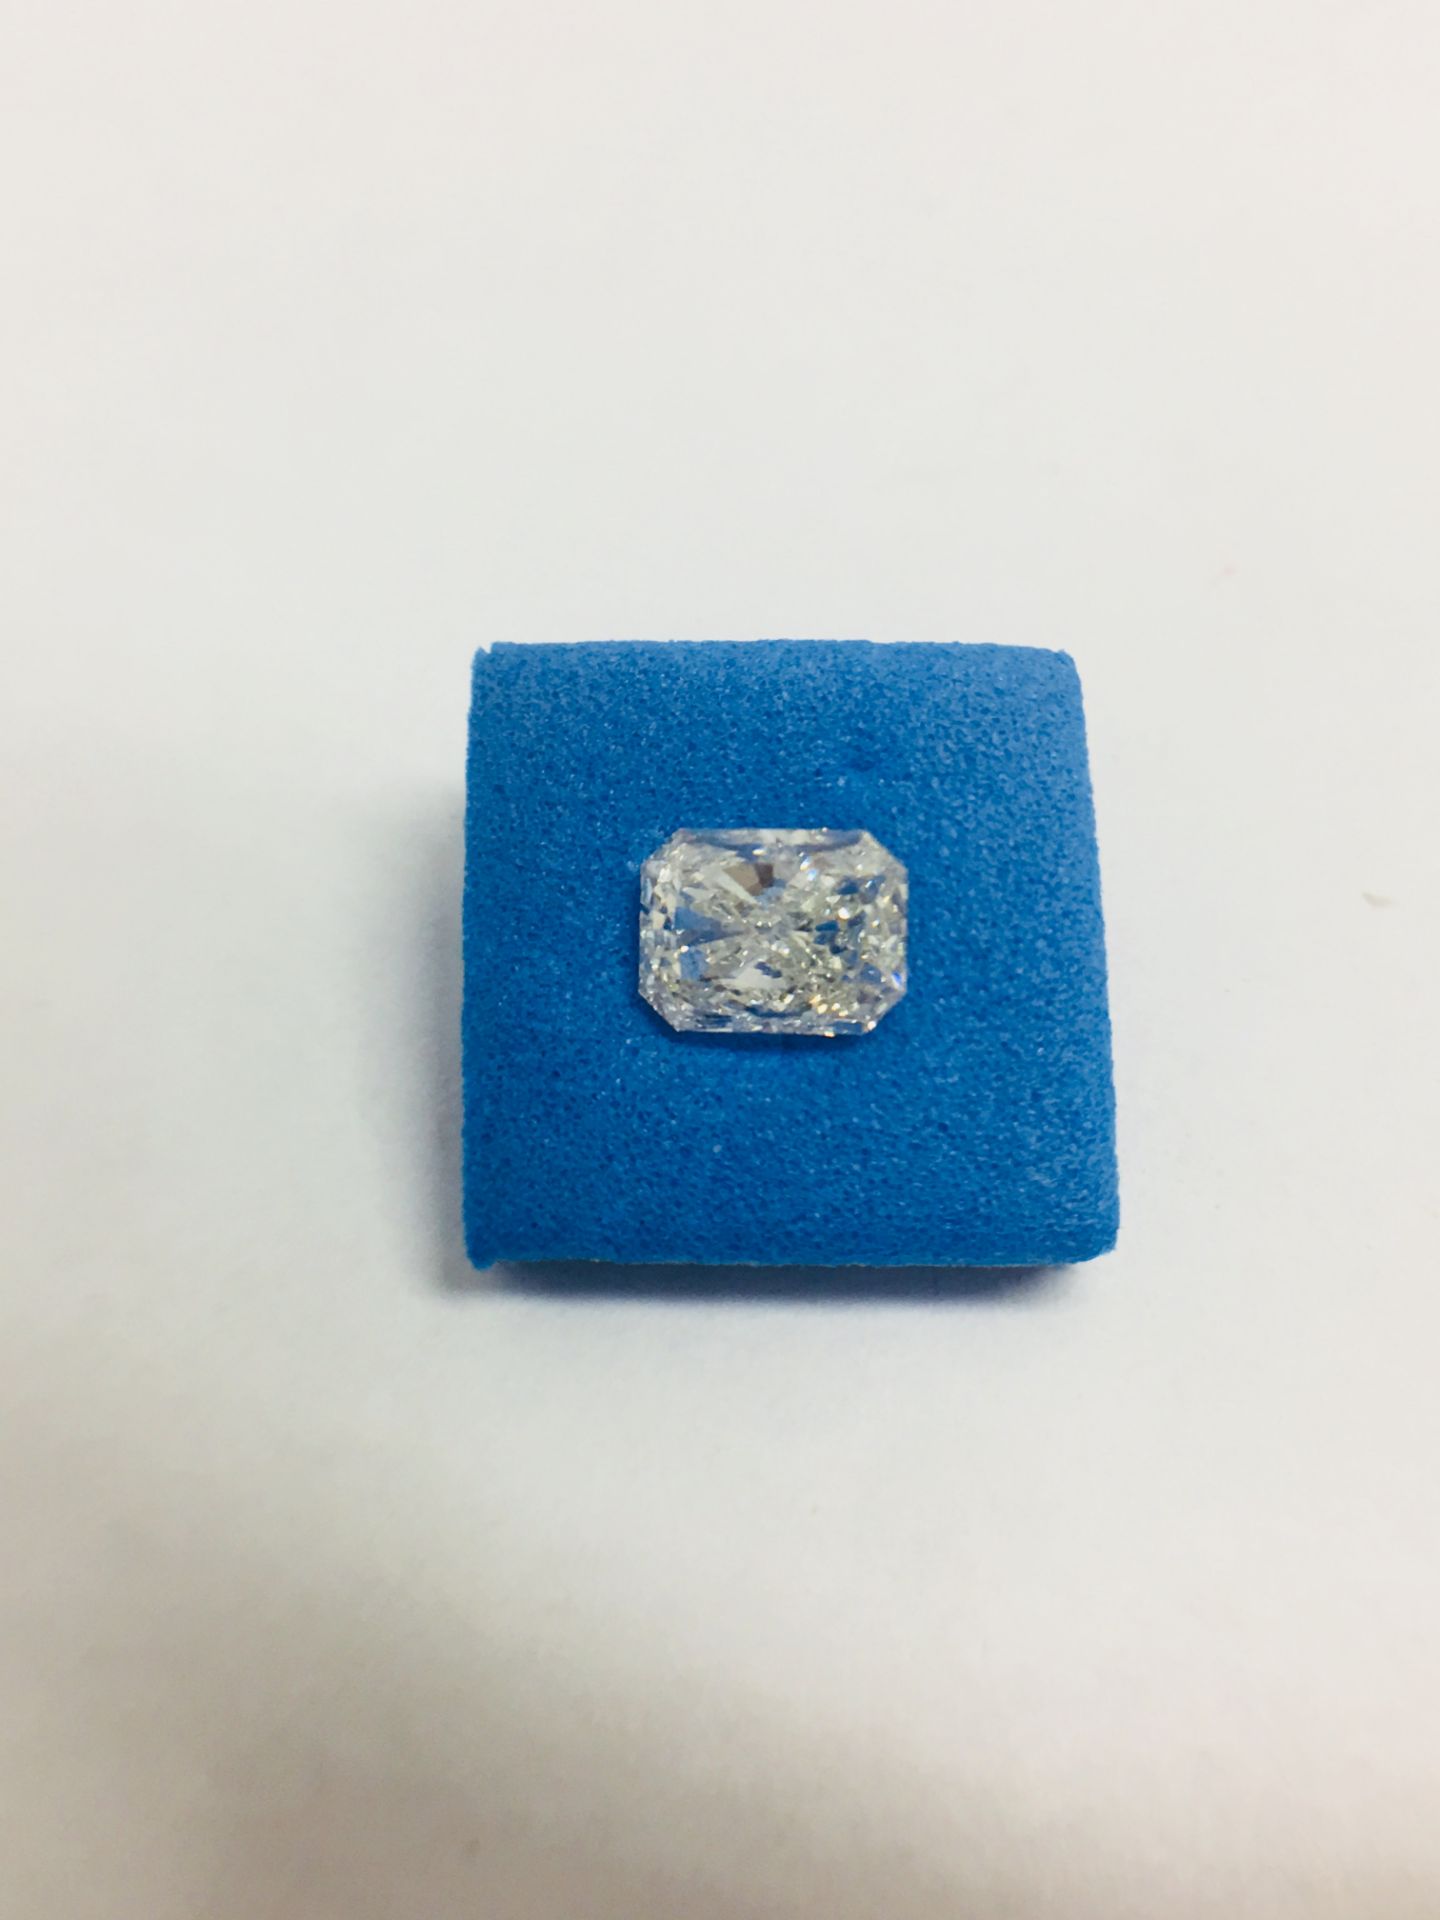 1Ct Radiant Cut Diamond